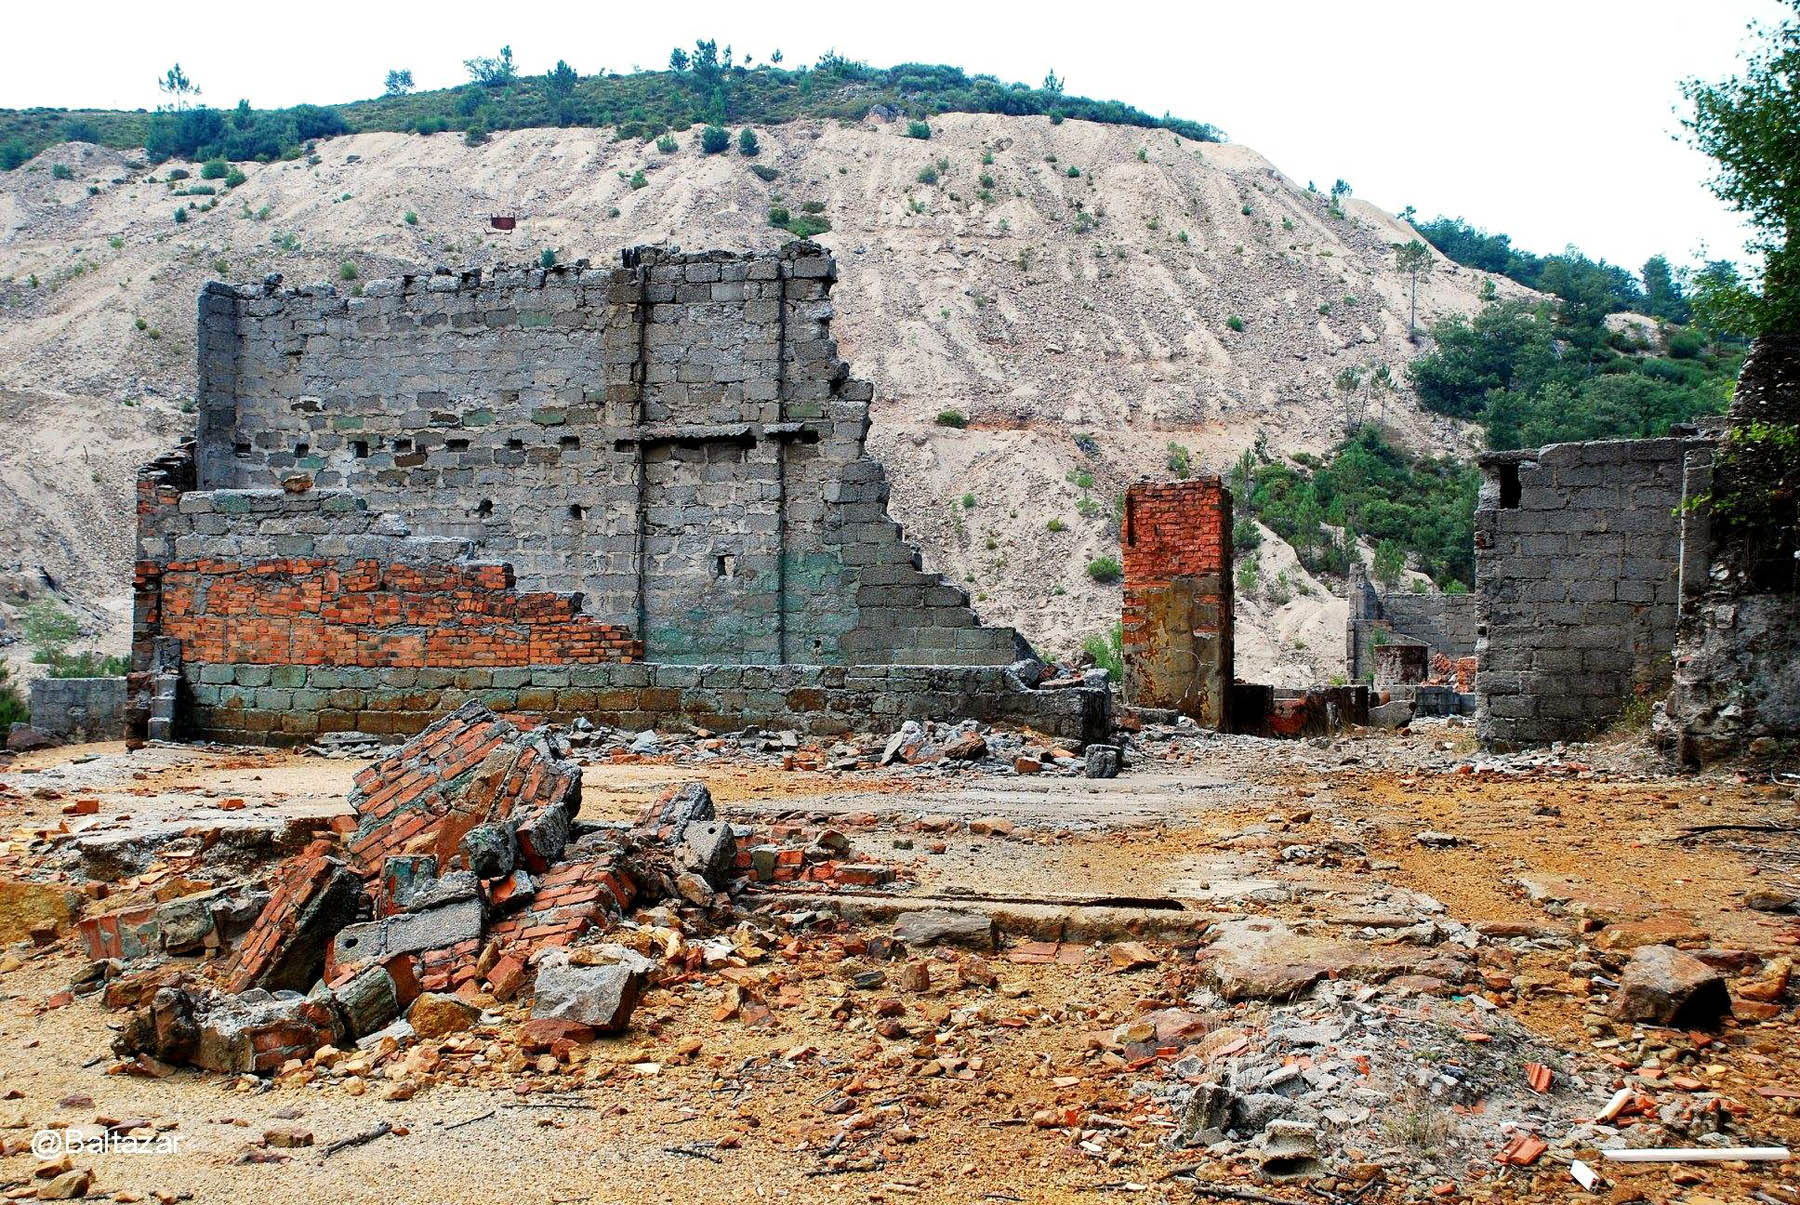 Abandoned mine waste piles in Borralha